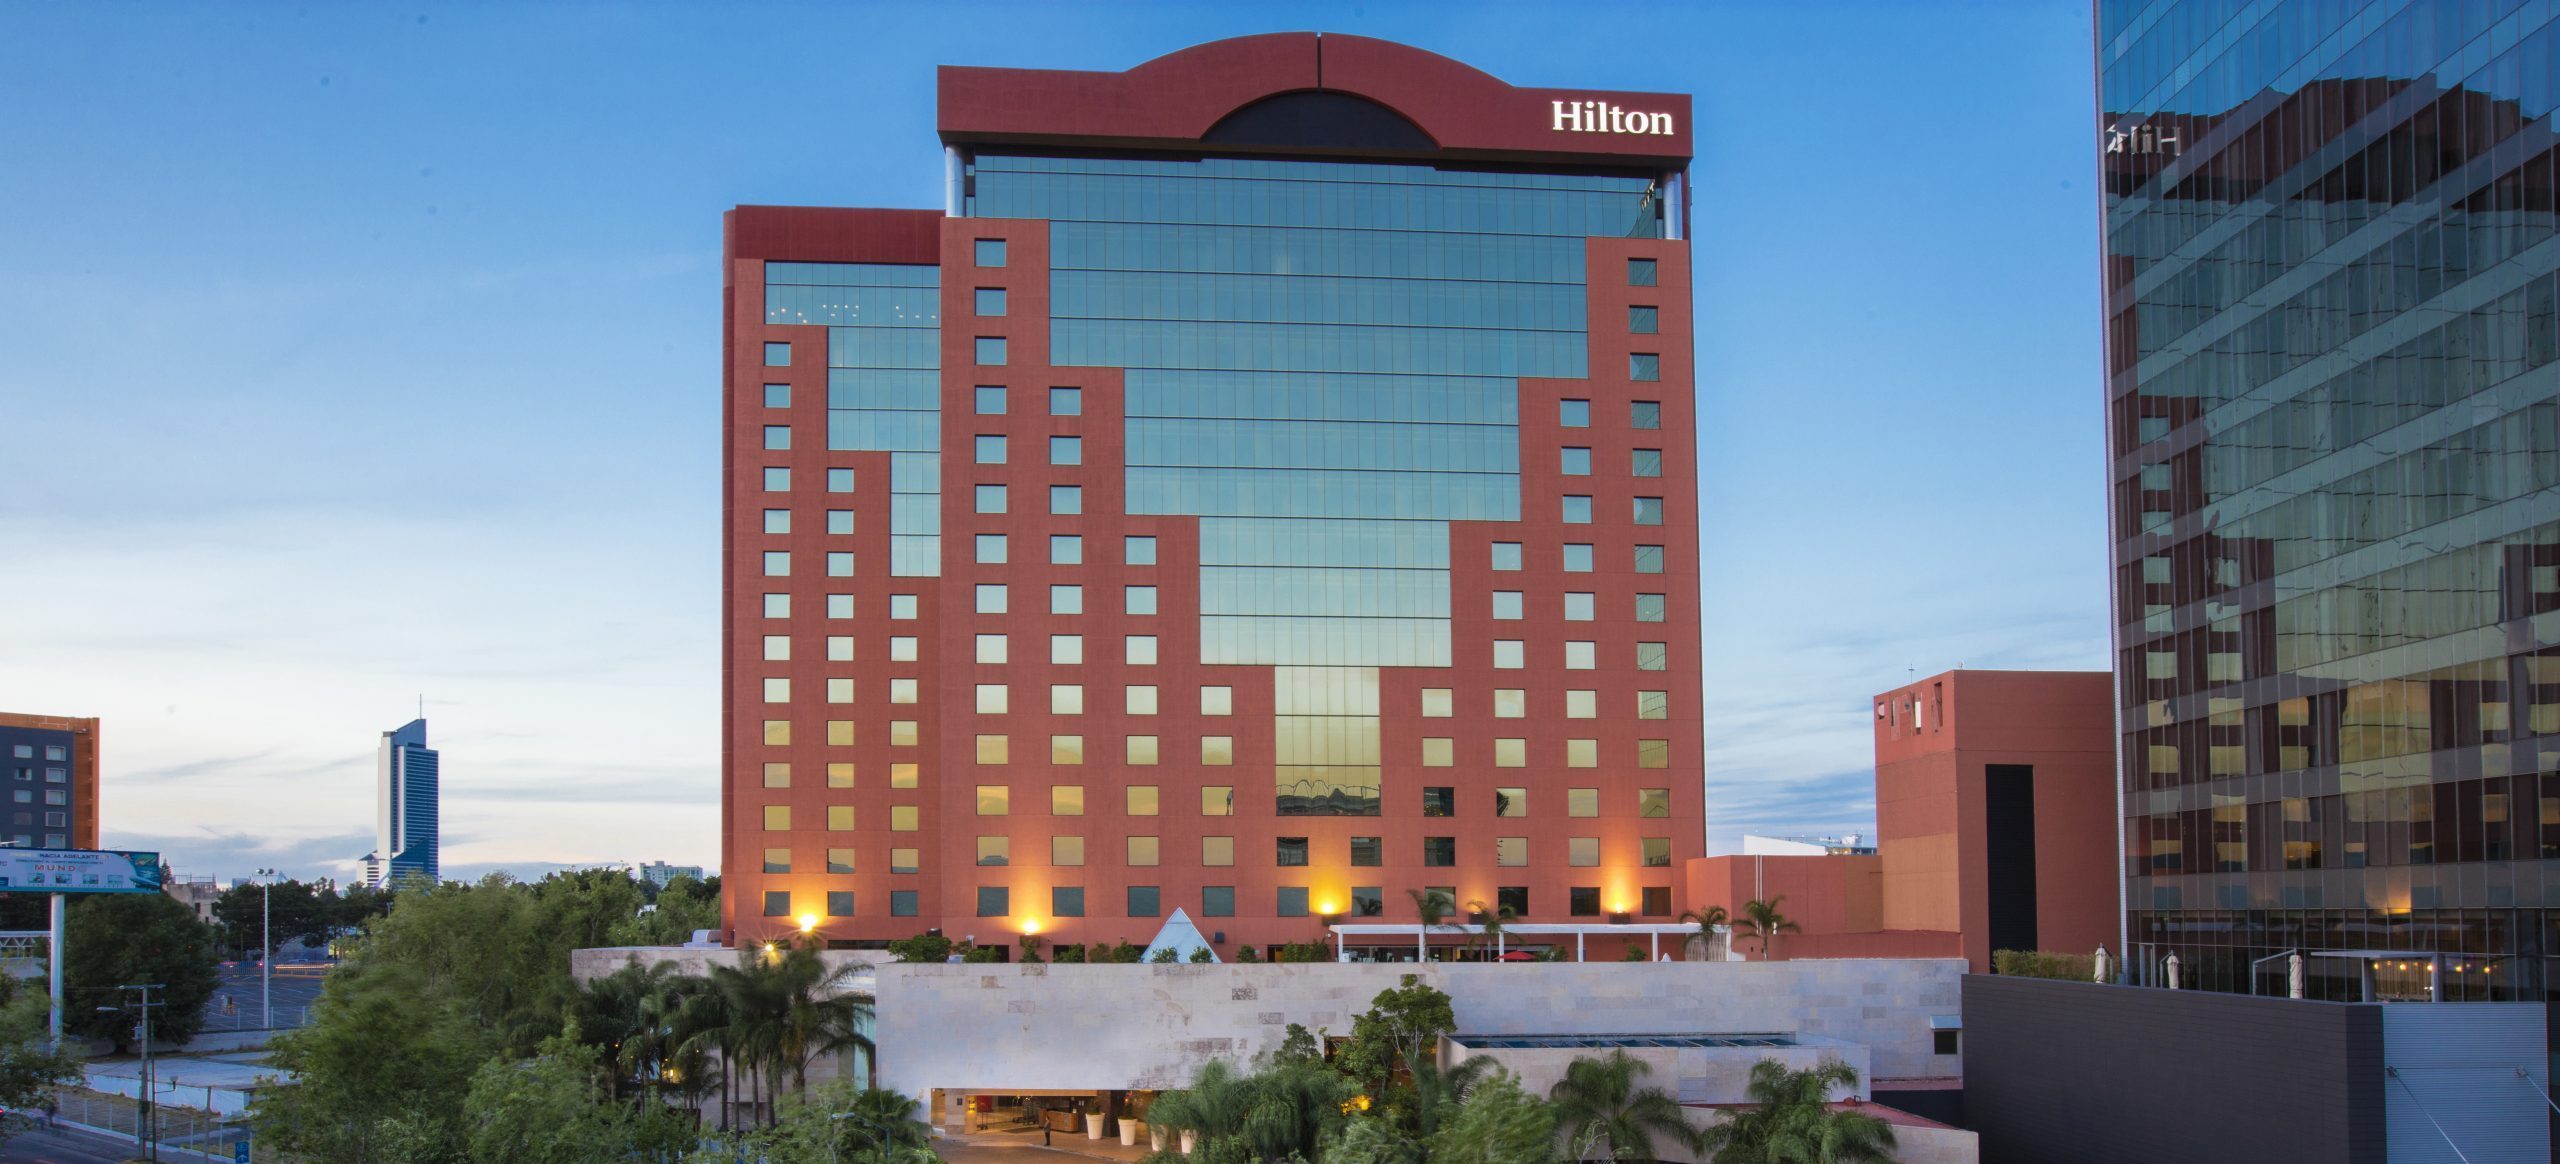 Barceló Hotel Group compra el hotel Hilton Guadalajara en México 